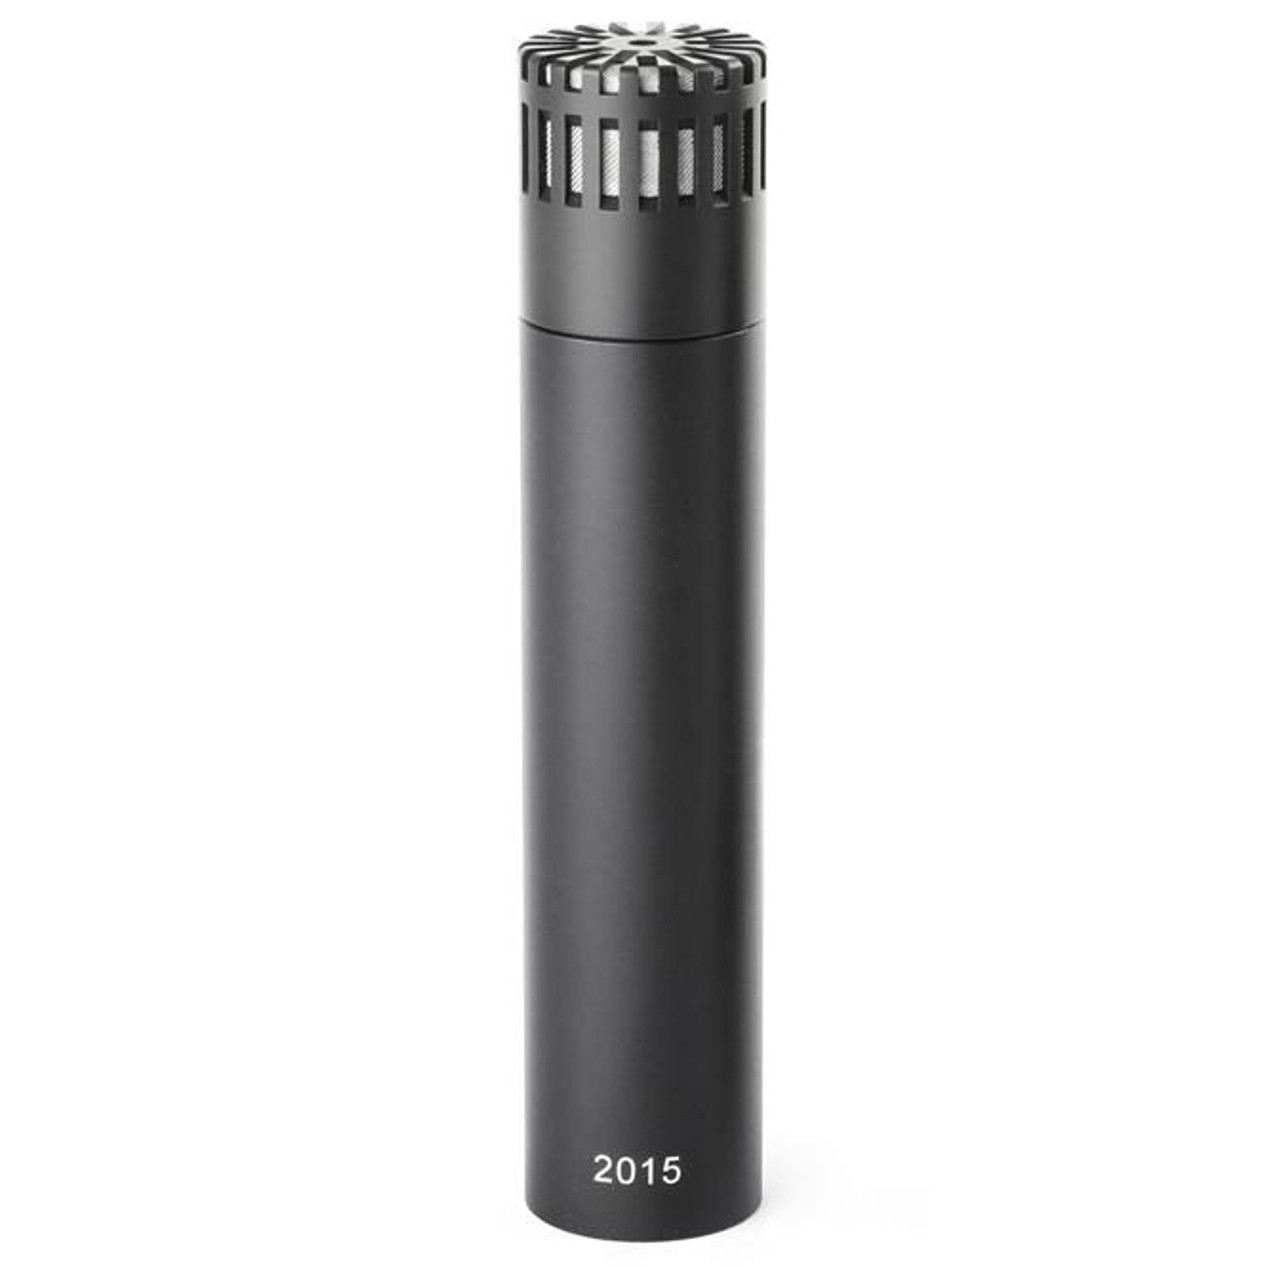 DPA 2015 Compact Microphone